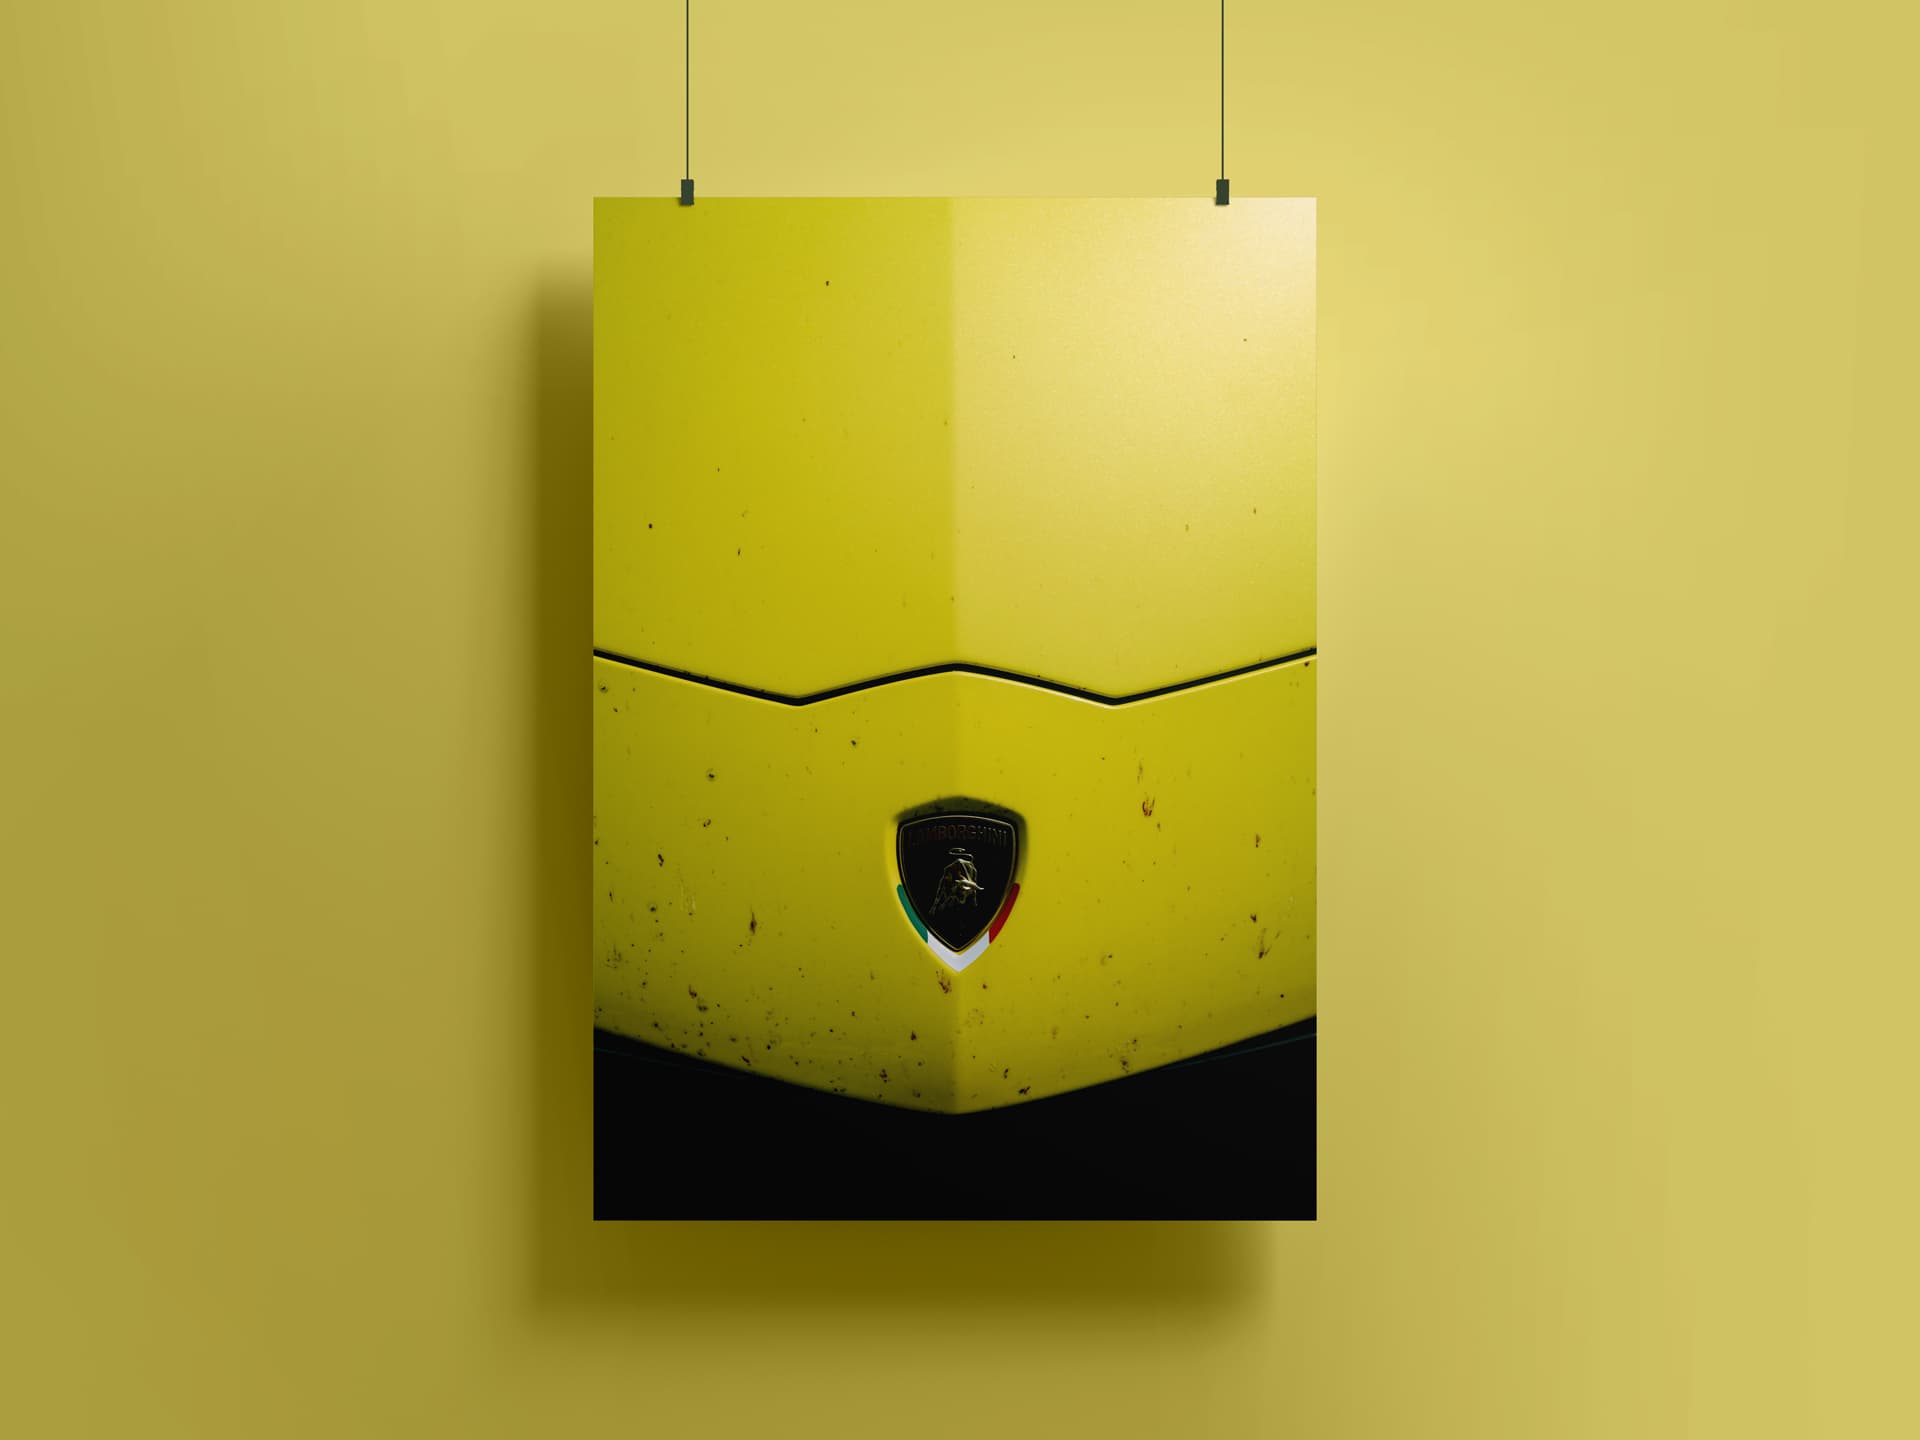 Ein Fineart Print der markante Front eines Lamborghini Aventador in gelb.